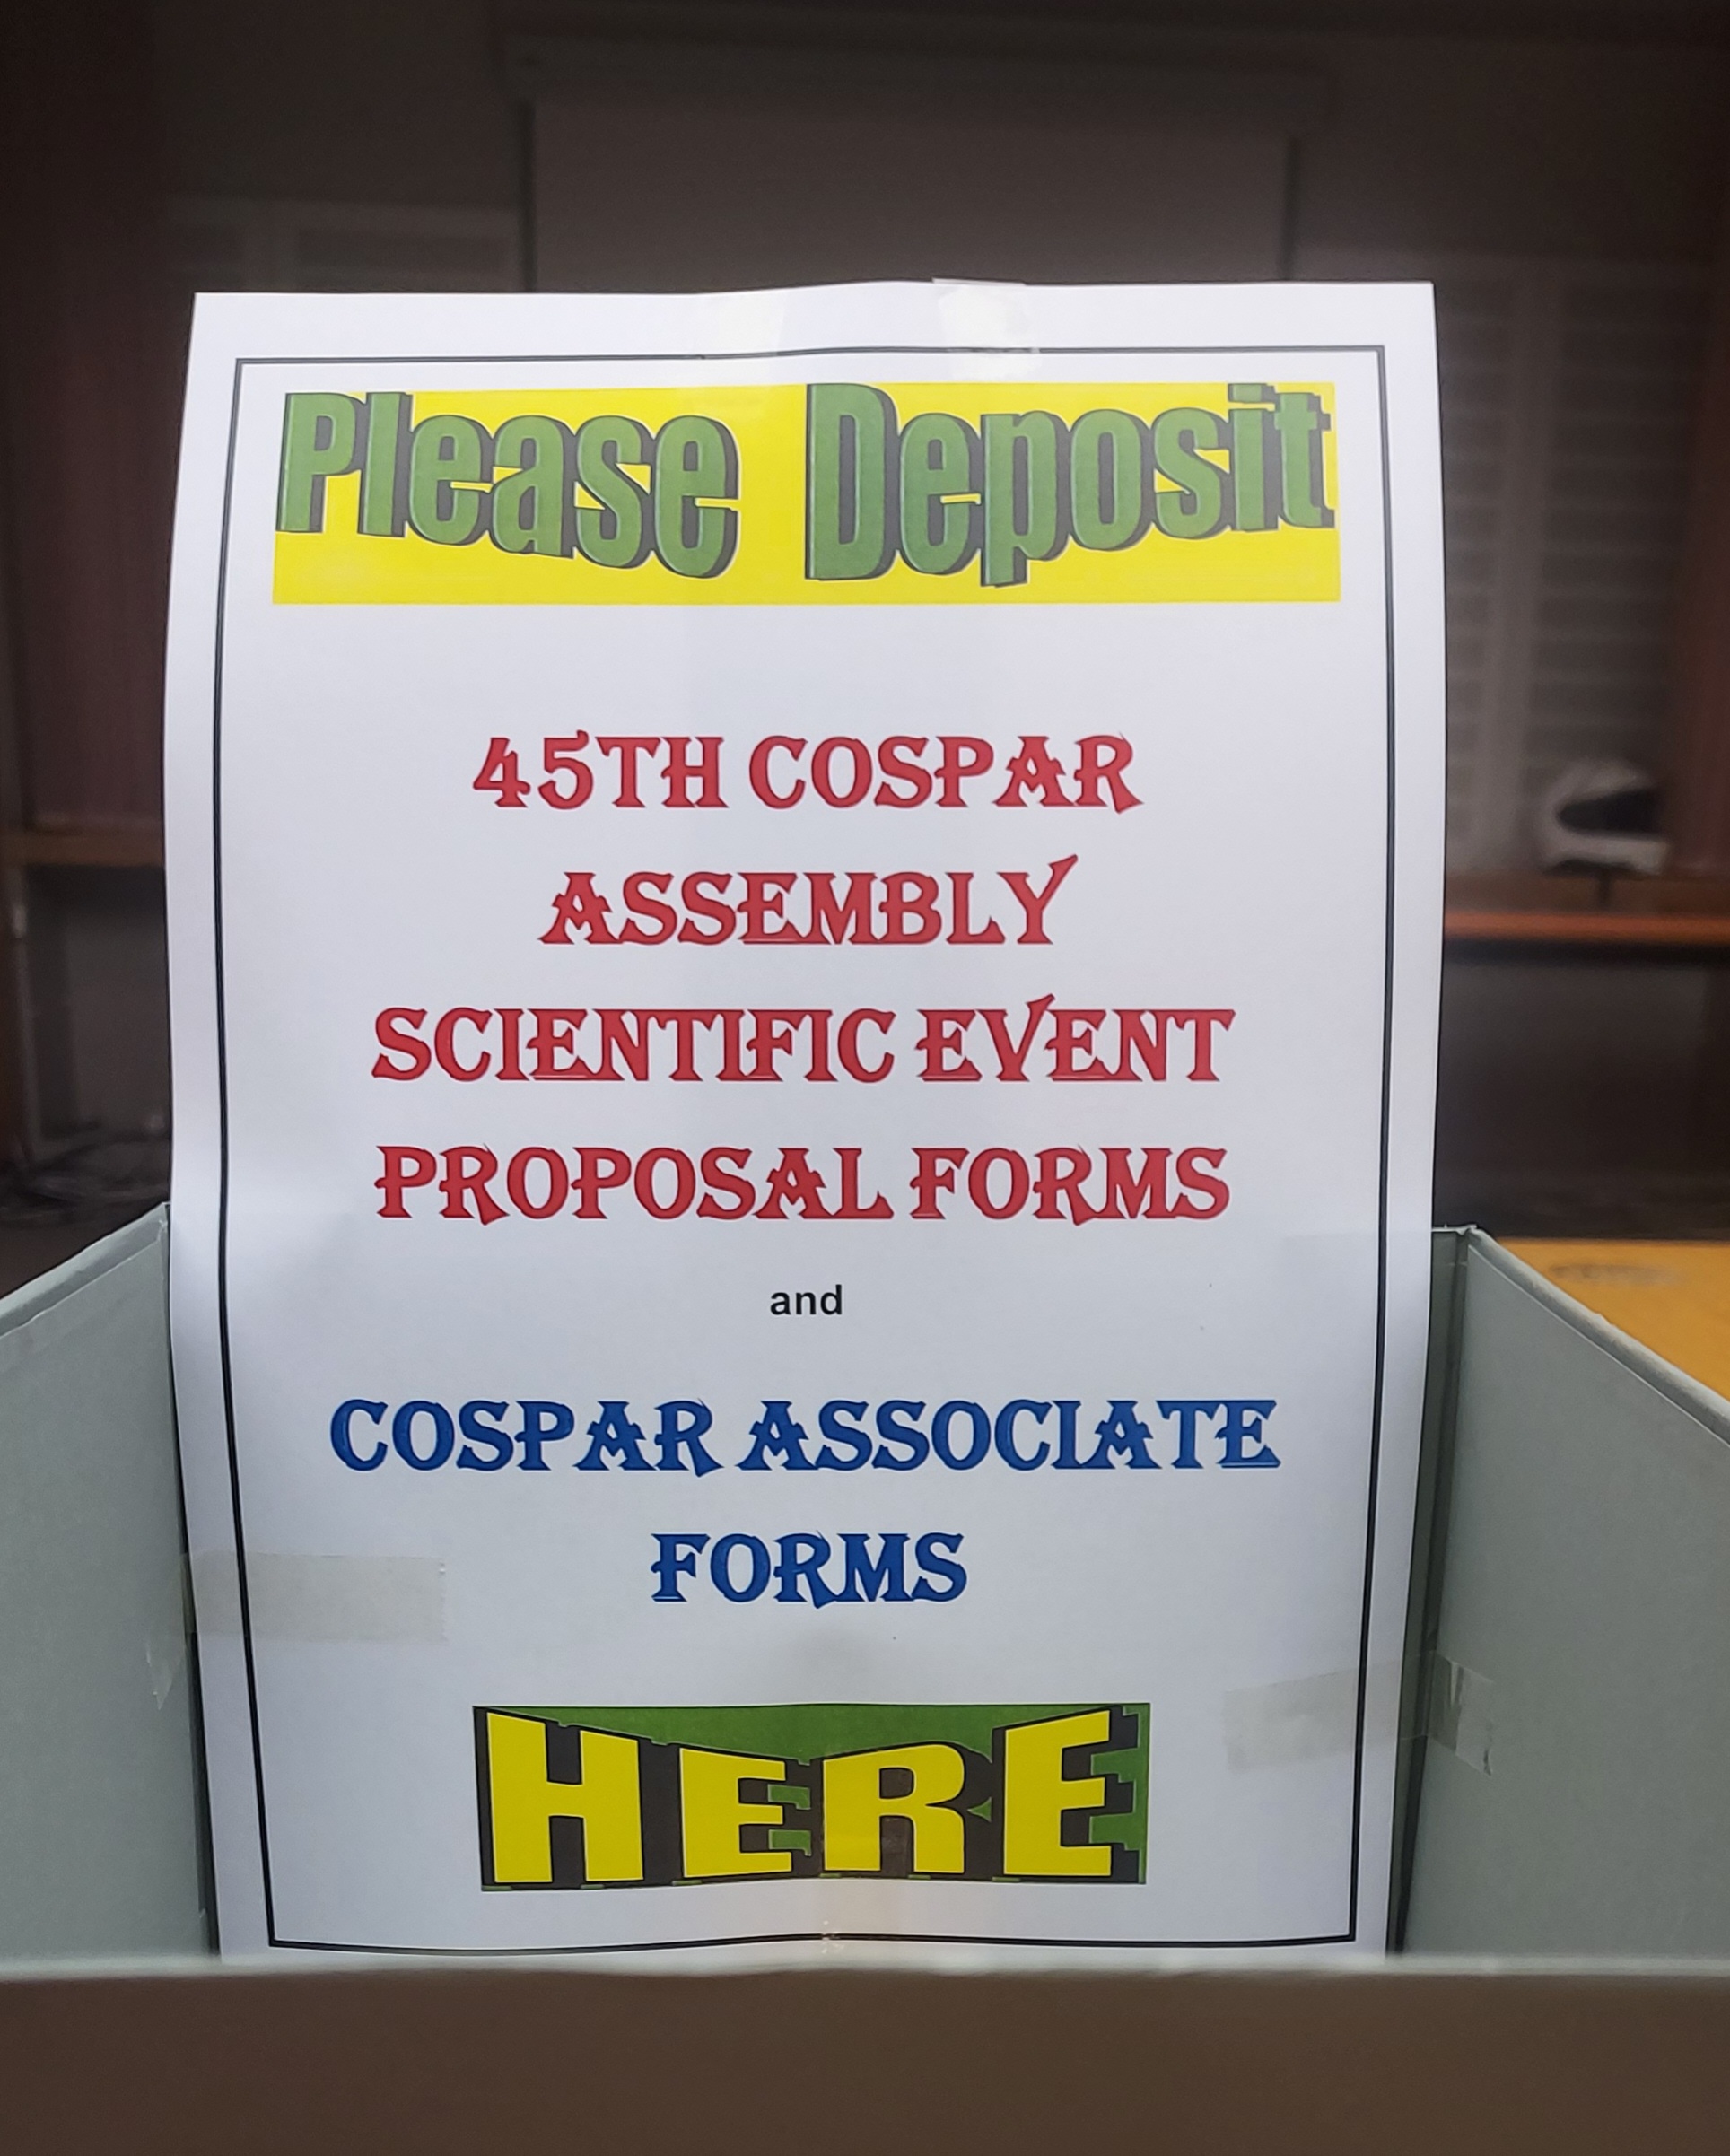 Scientific Event Proposal & Associate form collection box